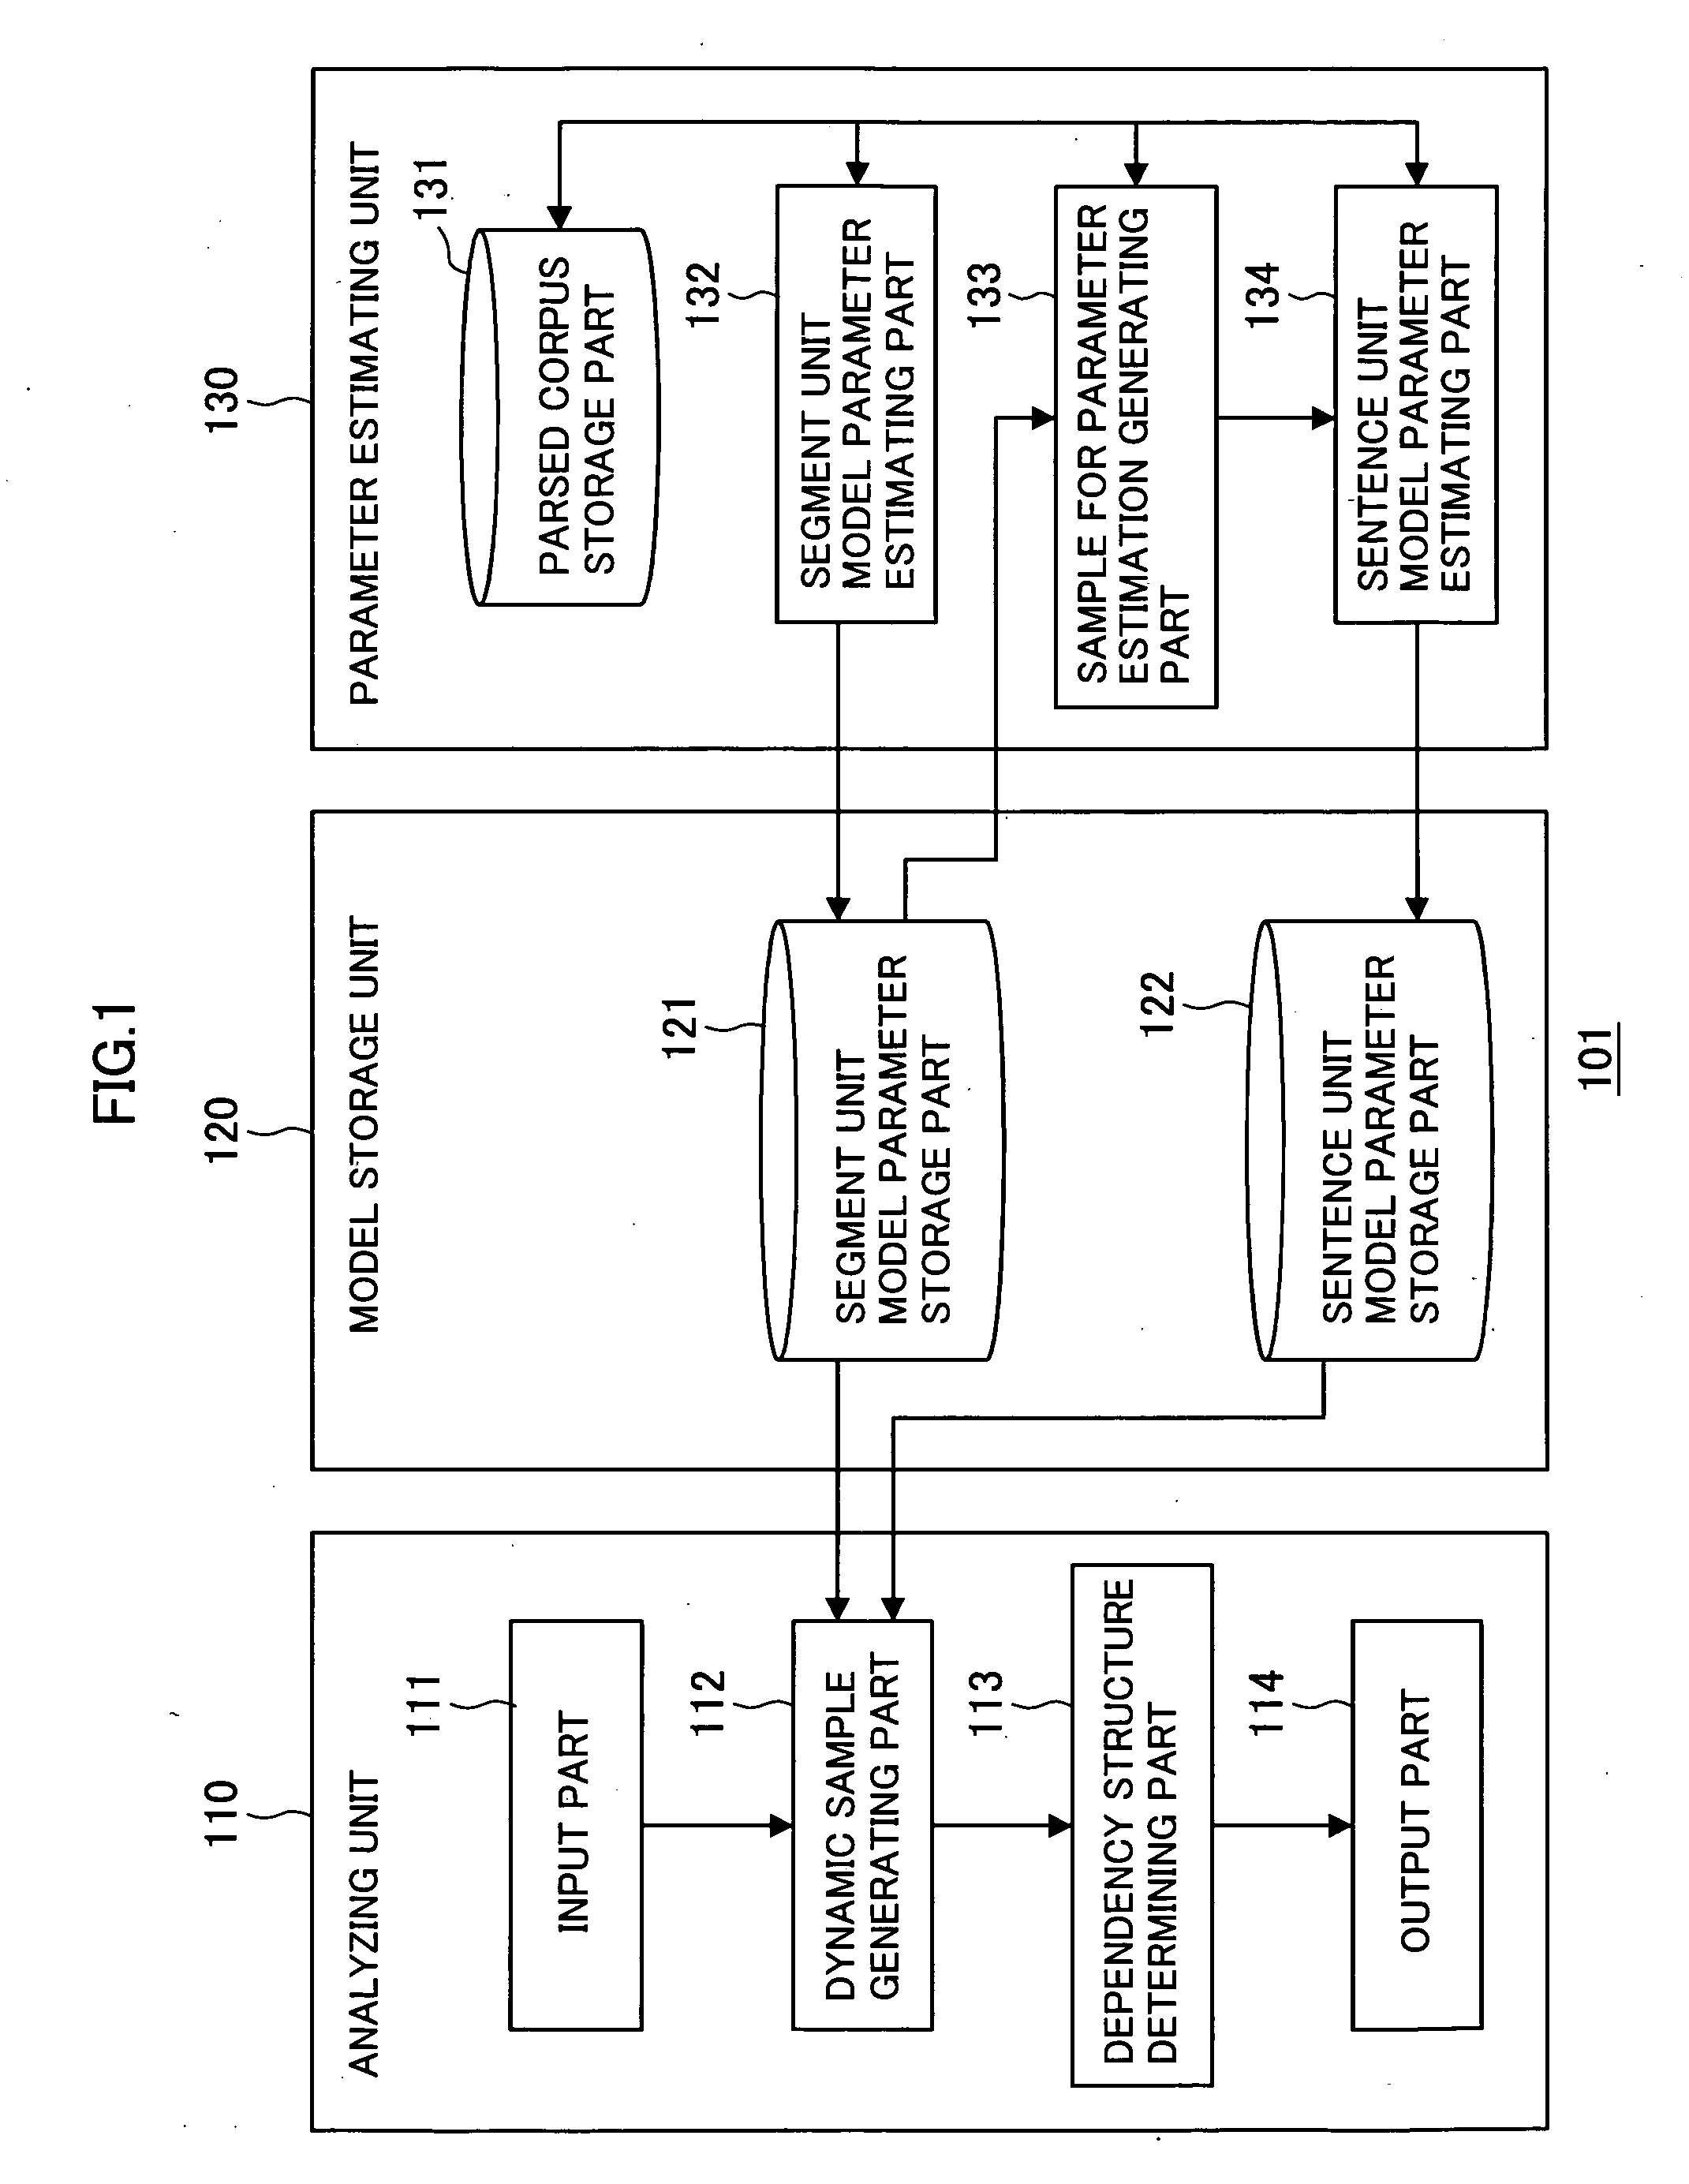 Language processing apparatus, language processing method, and computer program